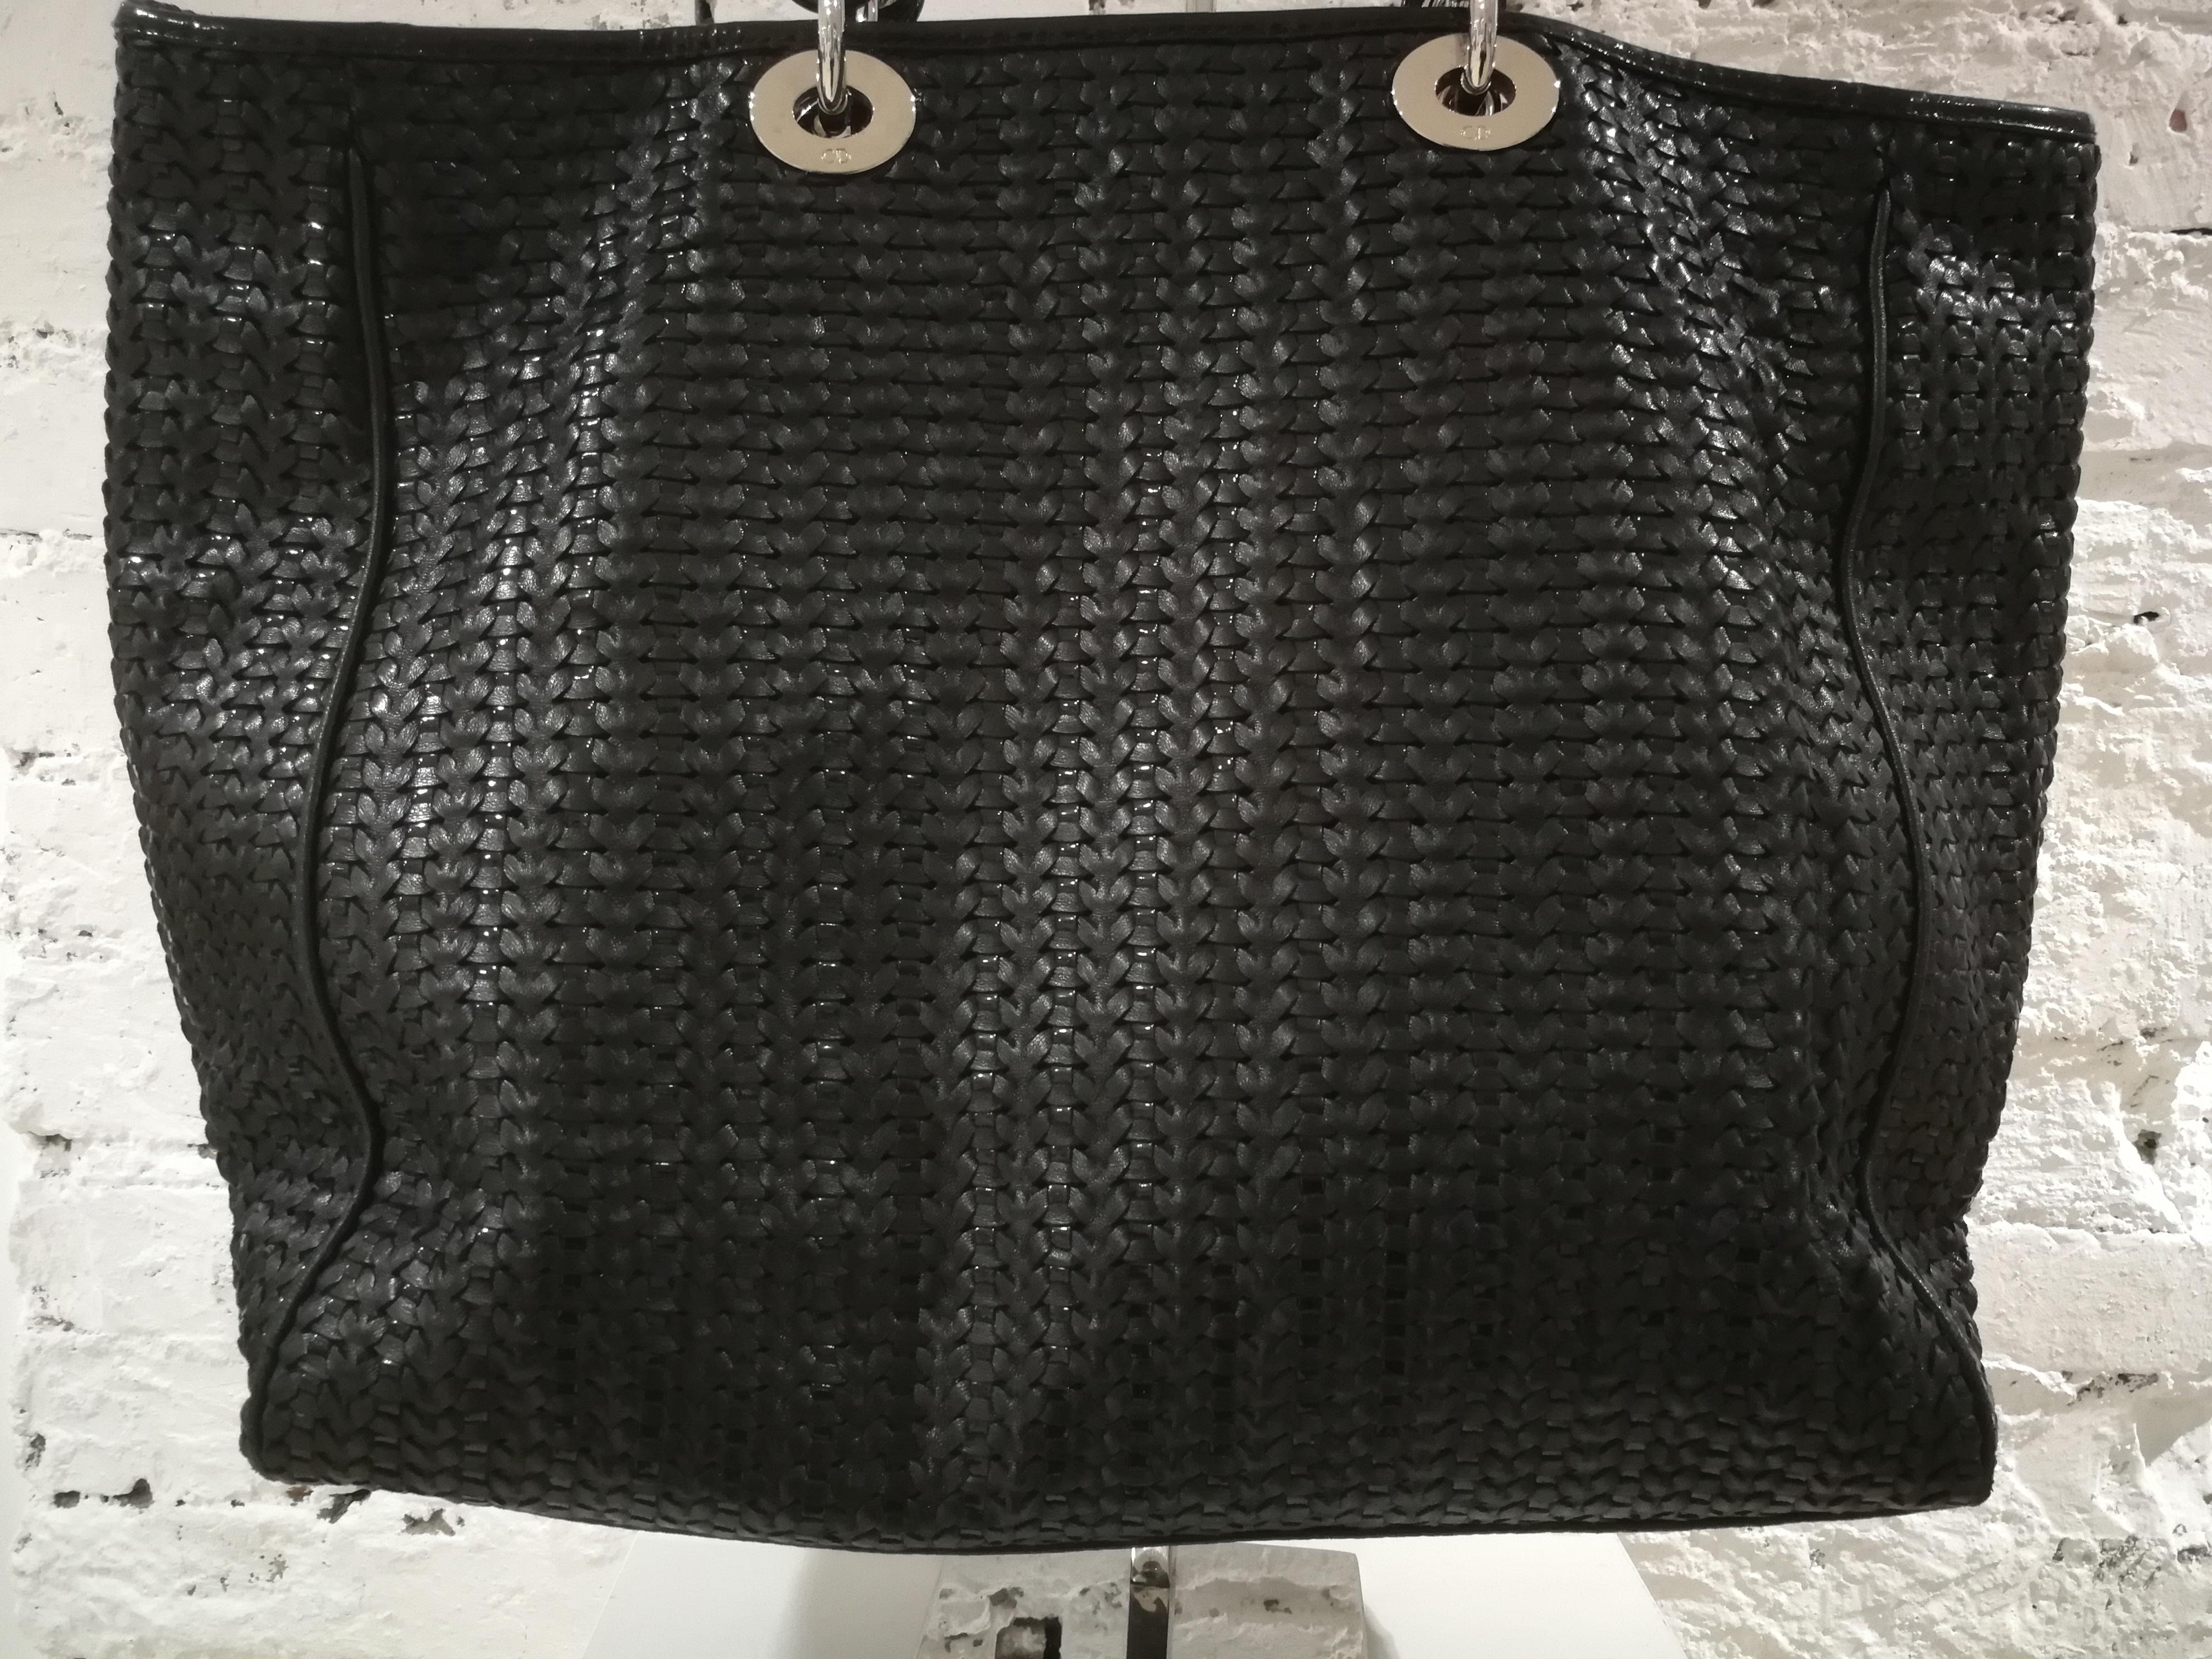 Christian Dior Black Patent Leather Bag 5